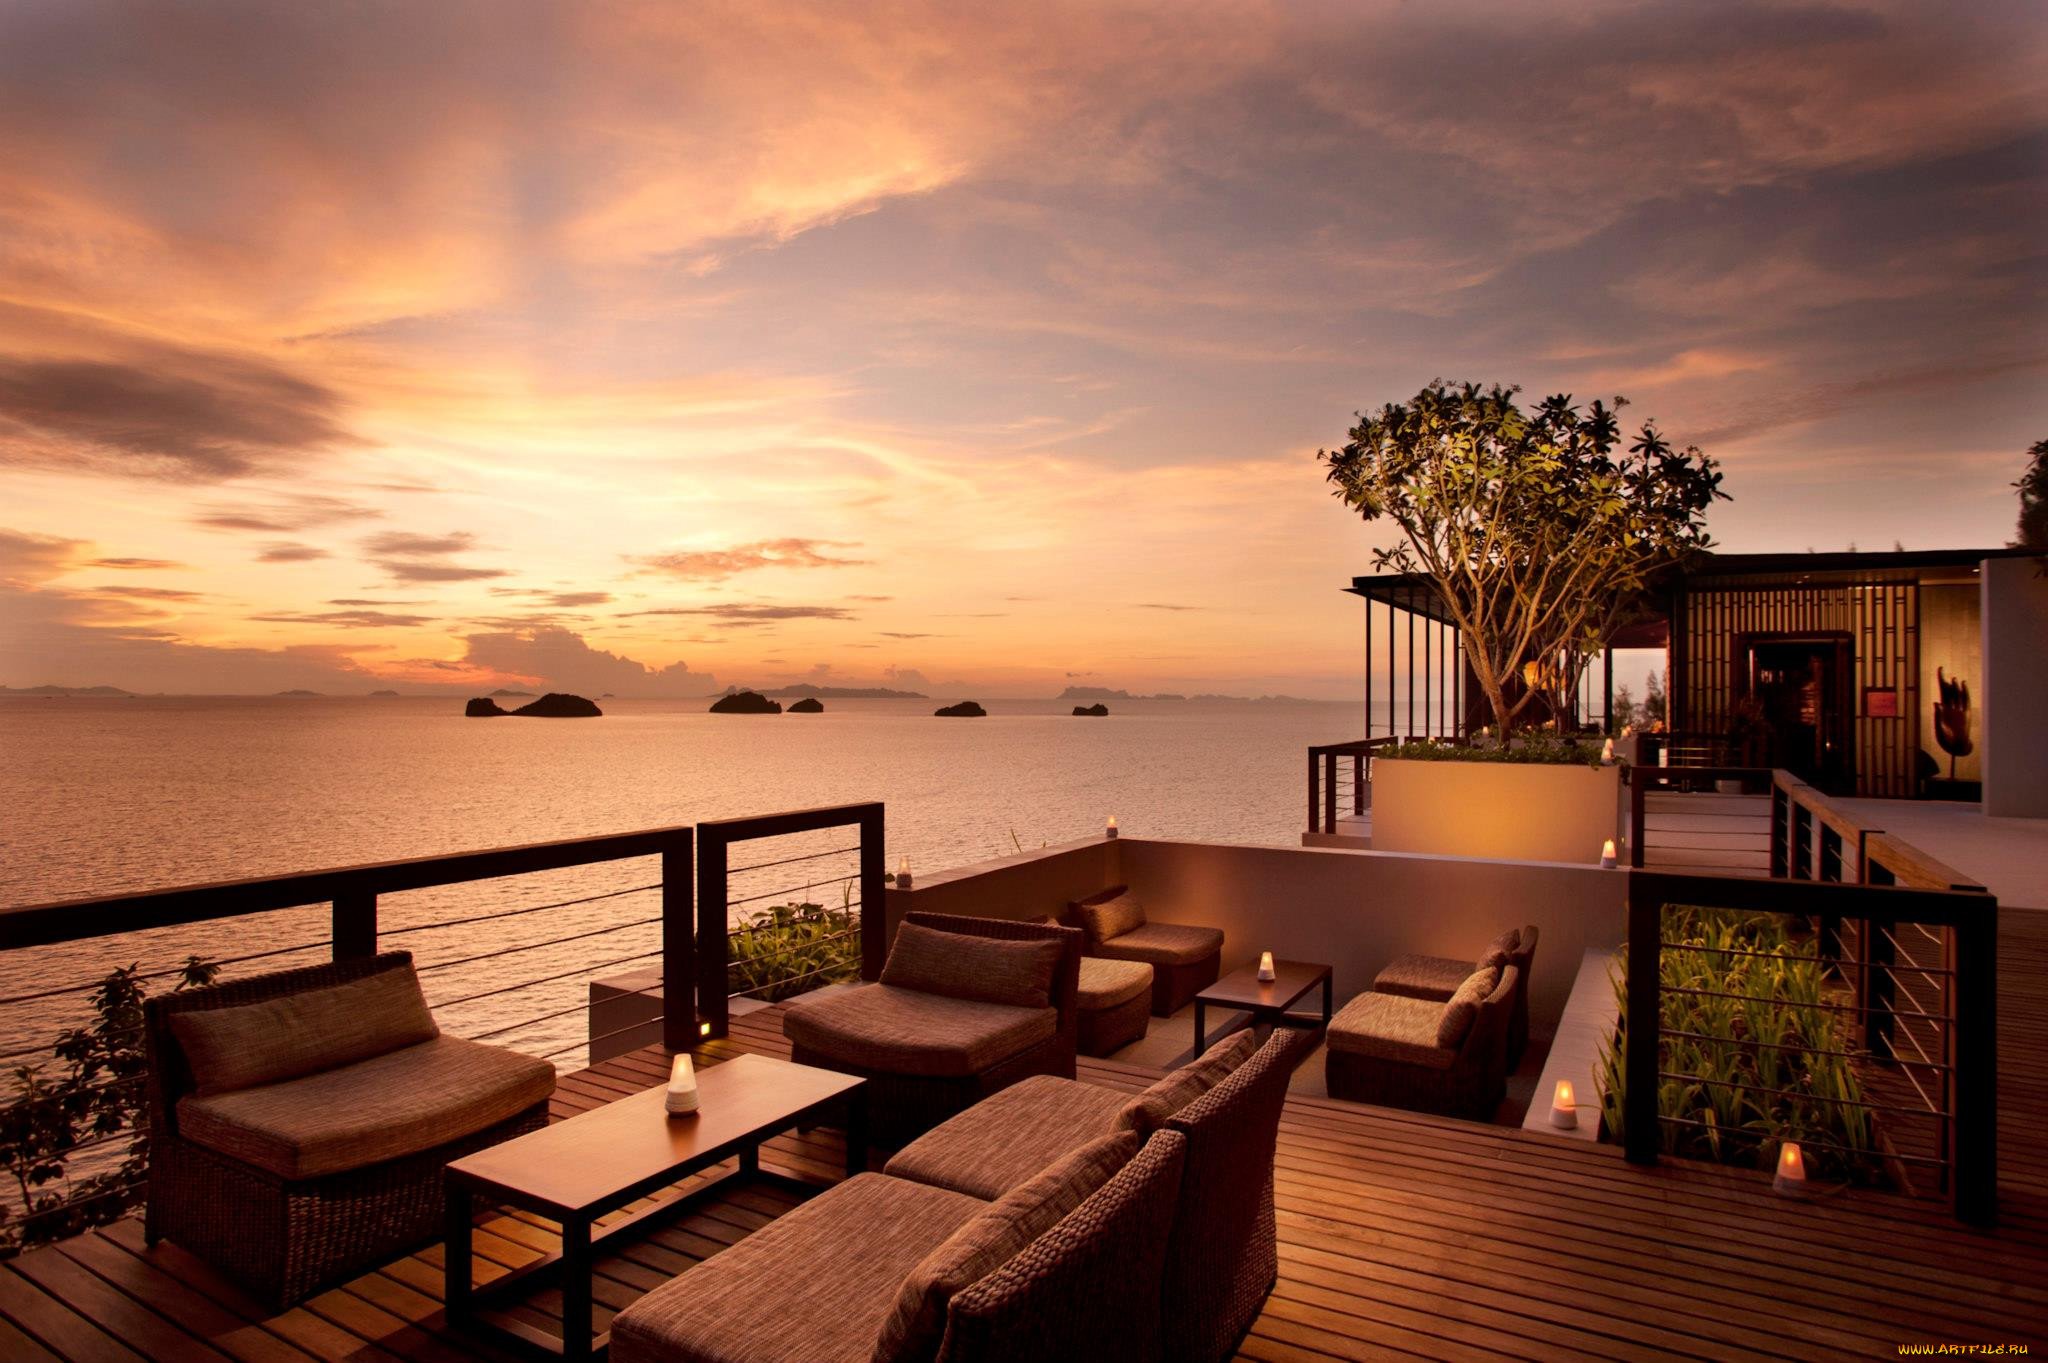 Терраса с видом на море. Conrad Koh Samui, Самуи, Таиланд. Самуи апартаменты Sunset. Веранда в Тайланде. Вид на океан с террасы.